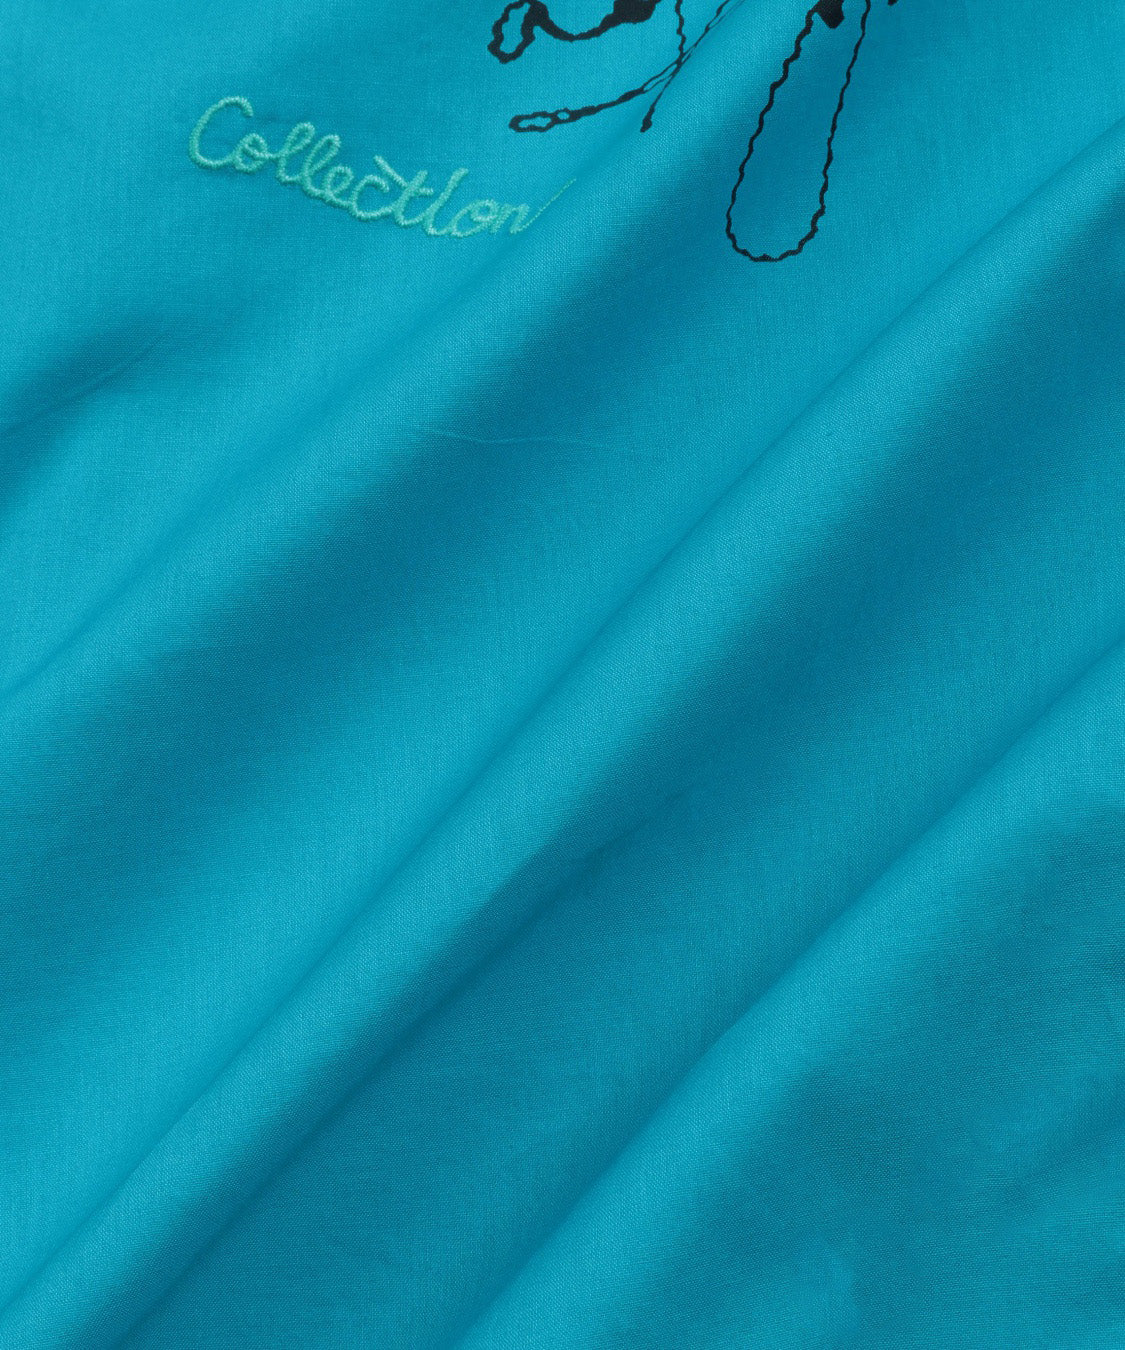 KANSAI BIS(カンサイビス)   オードリーステッチローンシャツ    